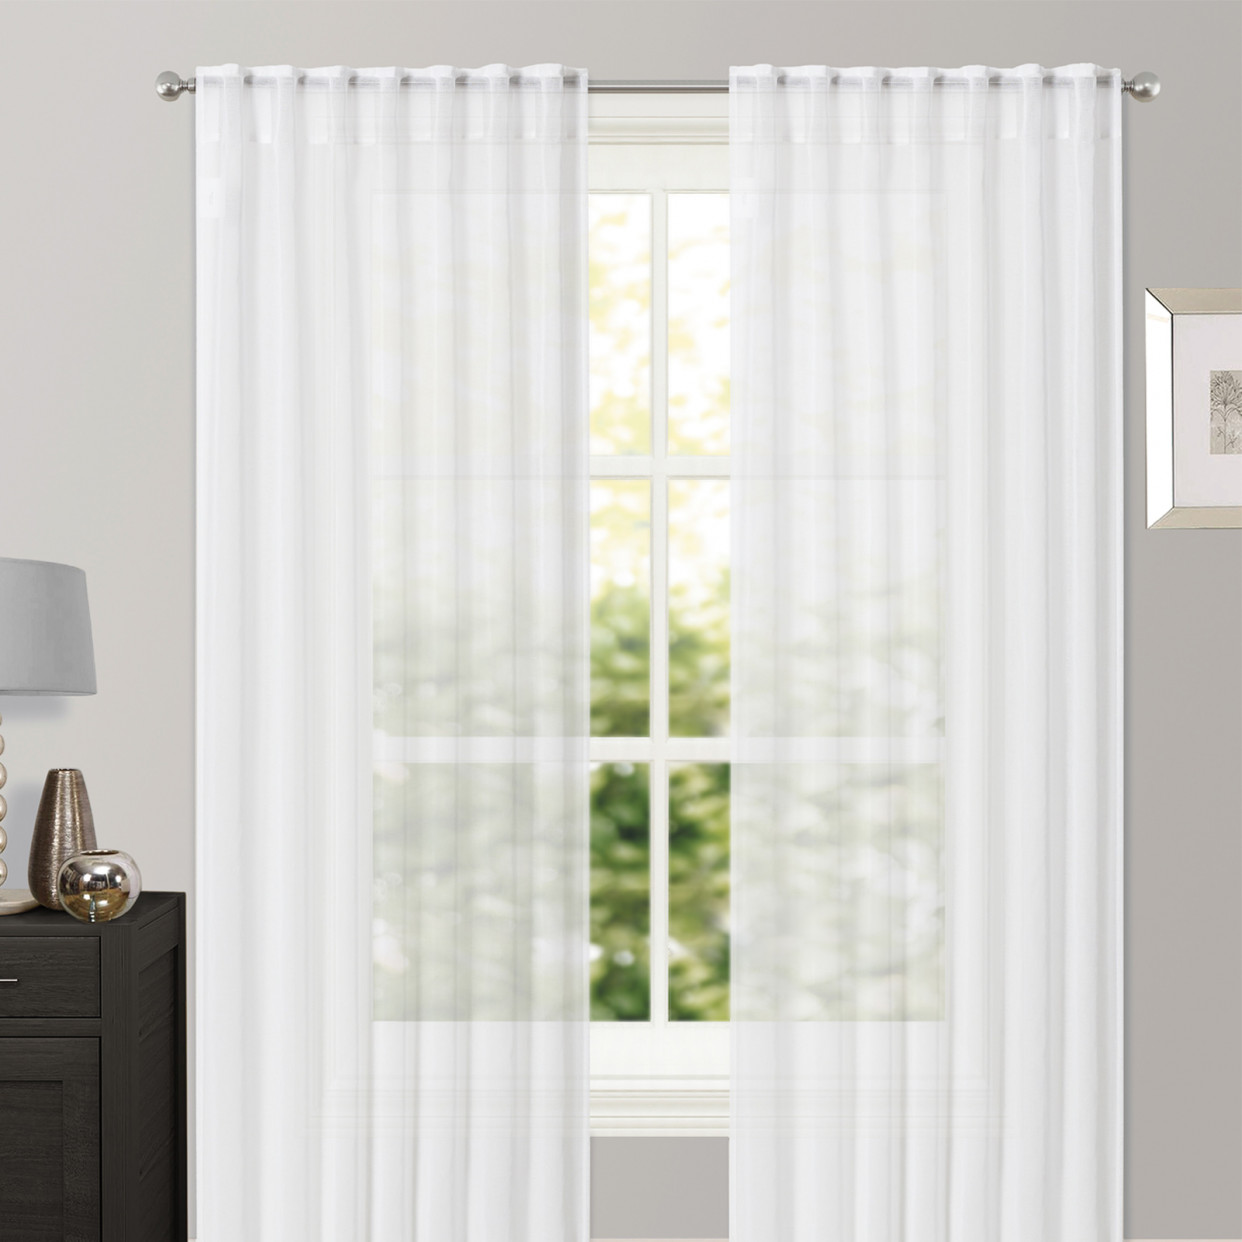 Brentfords Sheer Voile Curtains, White - 140 x 226cm (55" x 89")>